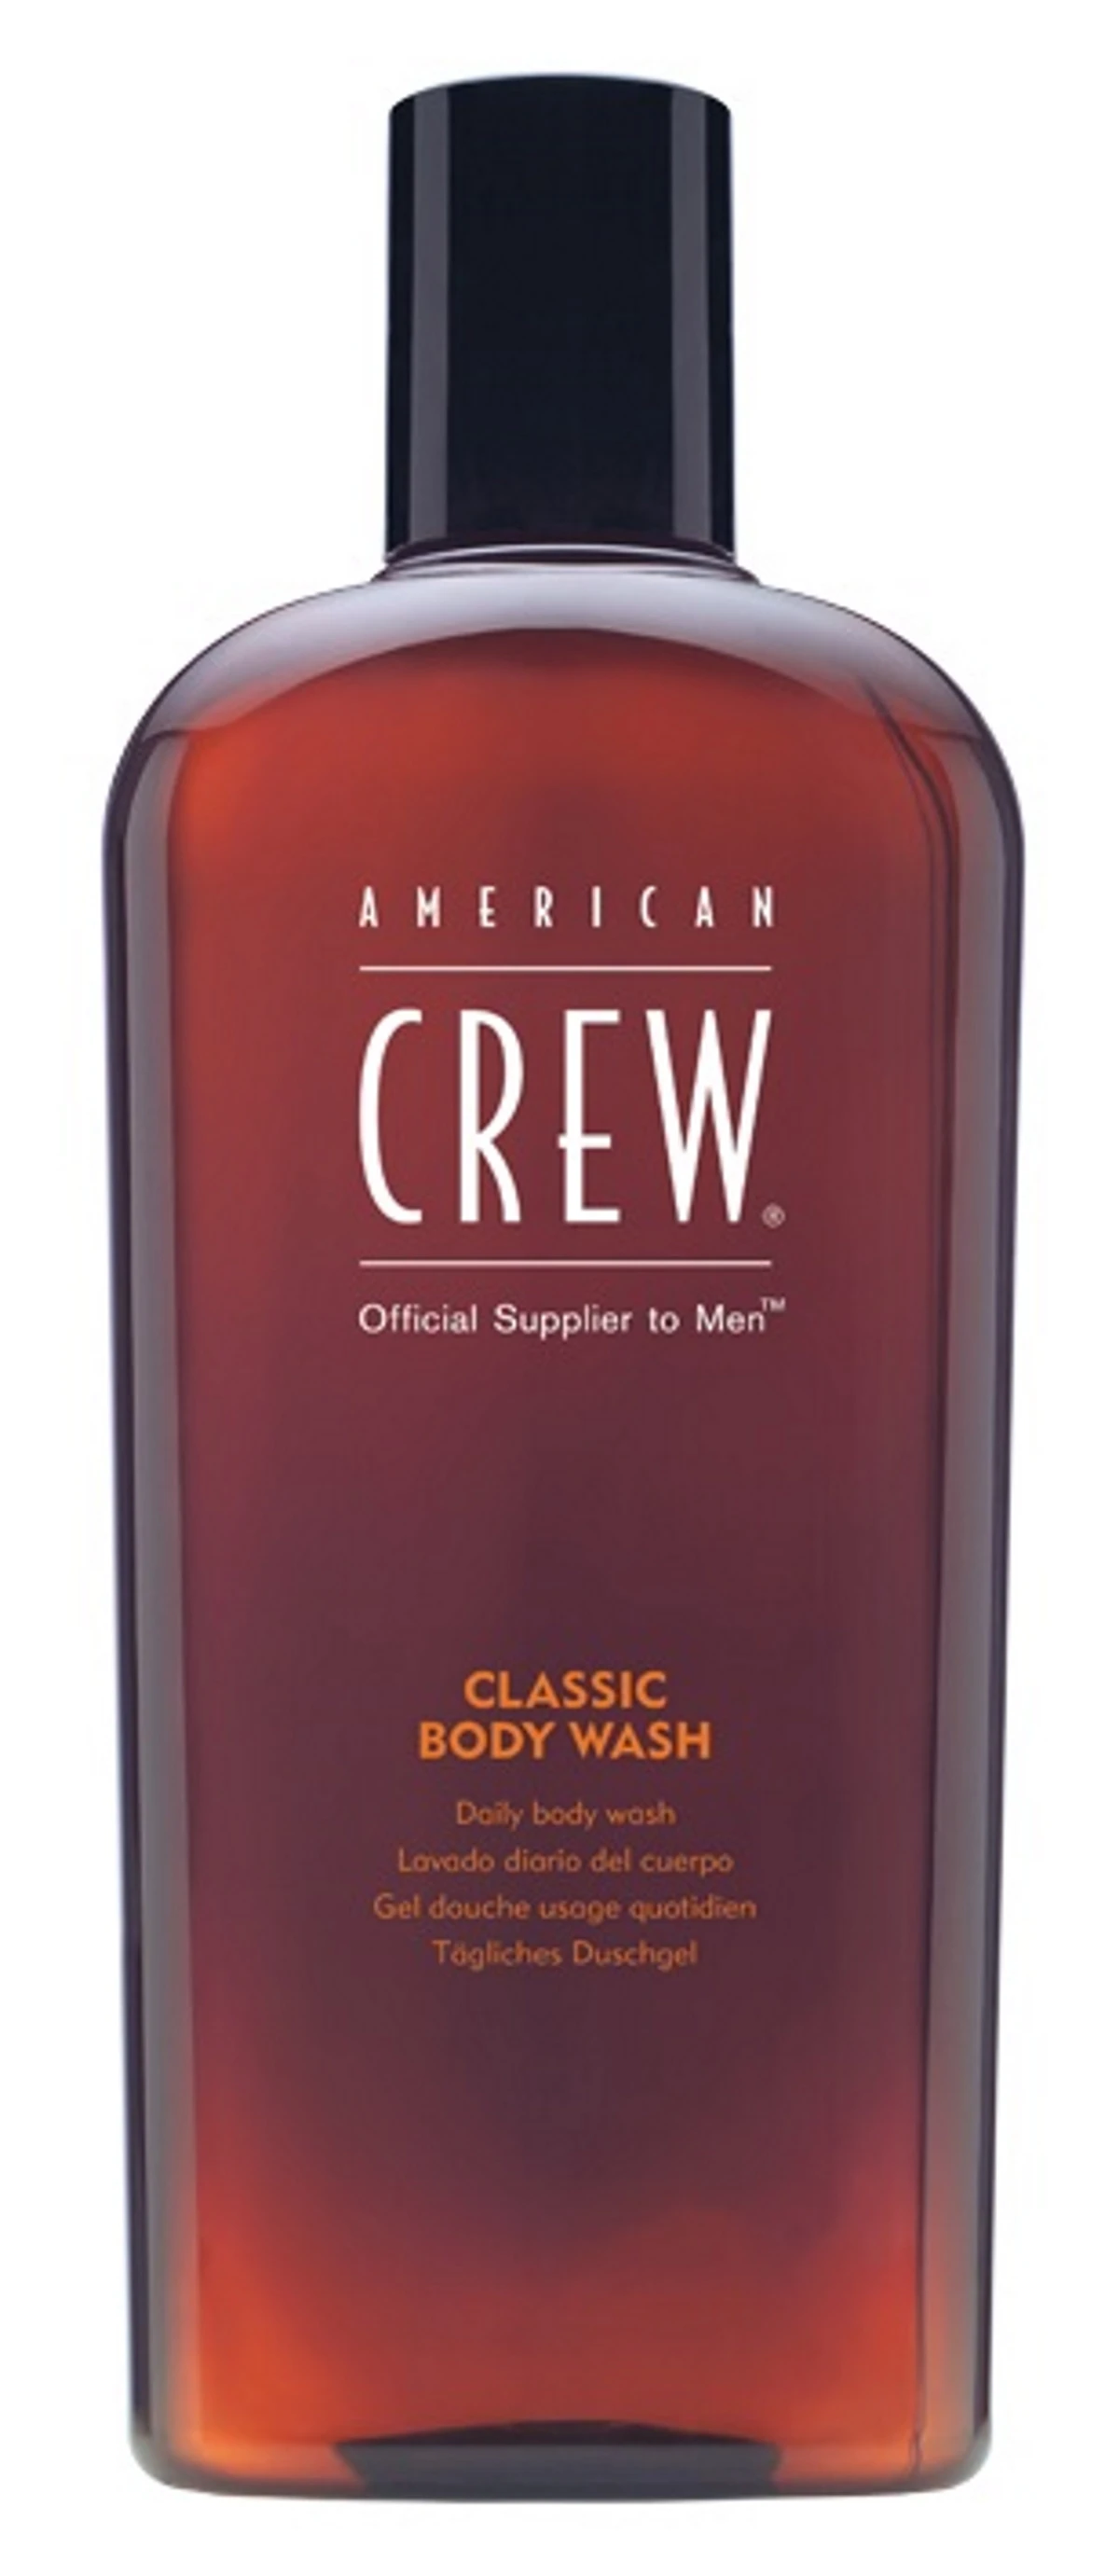 Gel douche body wash classic American crew, 450 ml | AliExpress